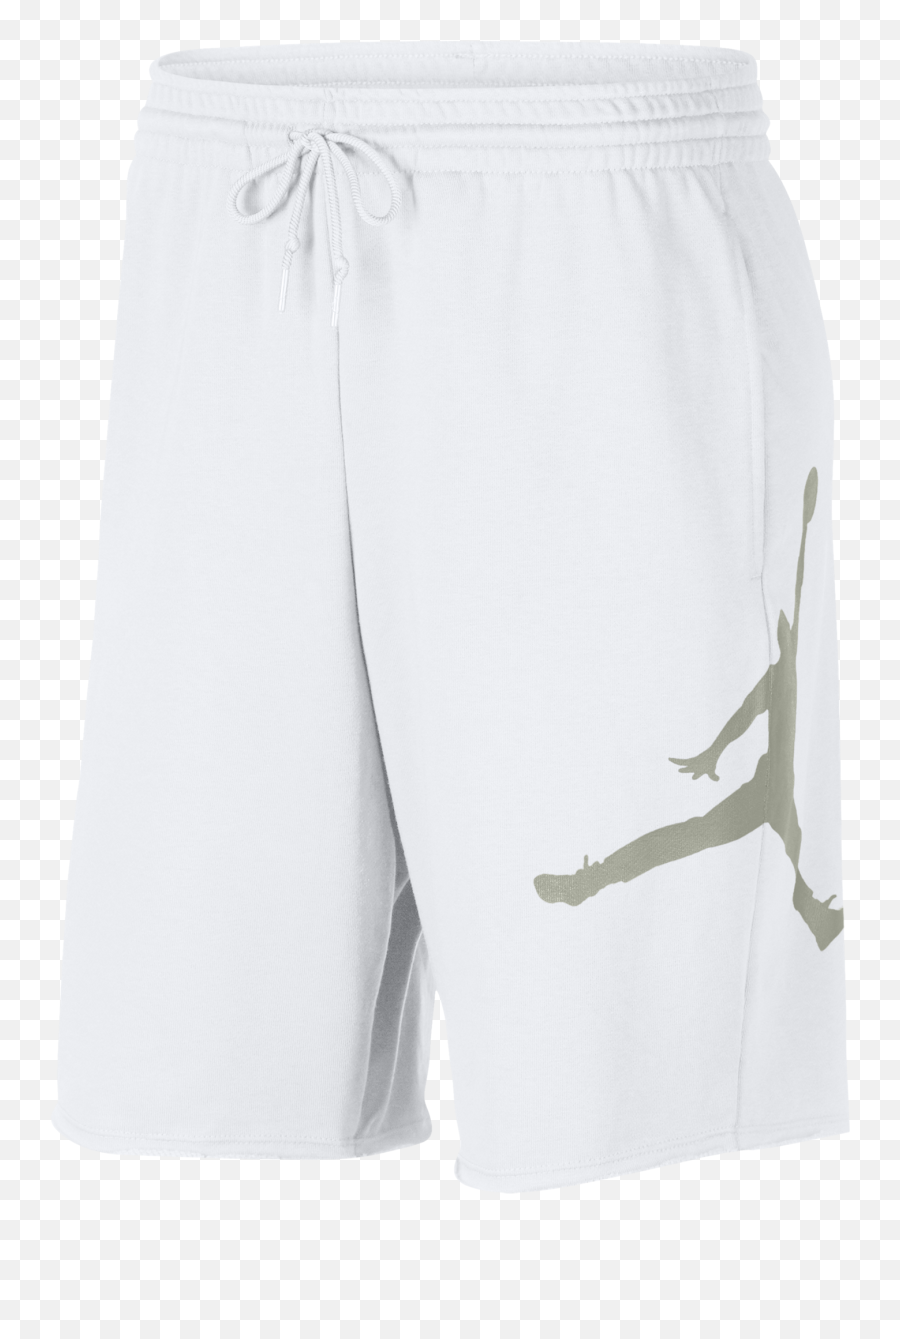 Jumpman Fleece Shorts - Air Jordan Jumpman Fleece White Shorts Emoji,Jumpman Logo